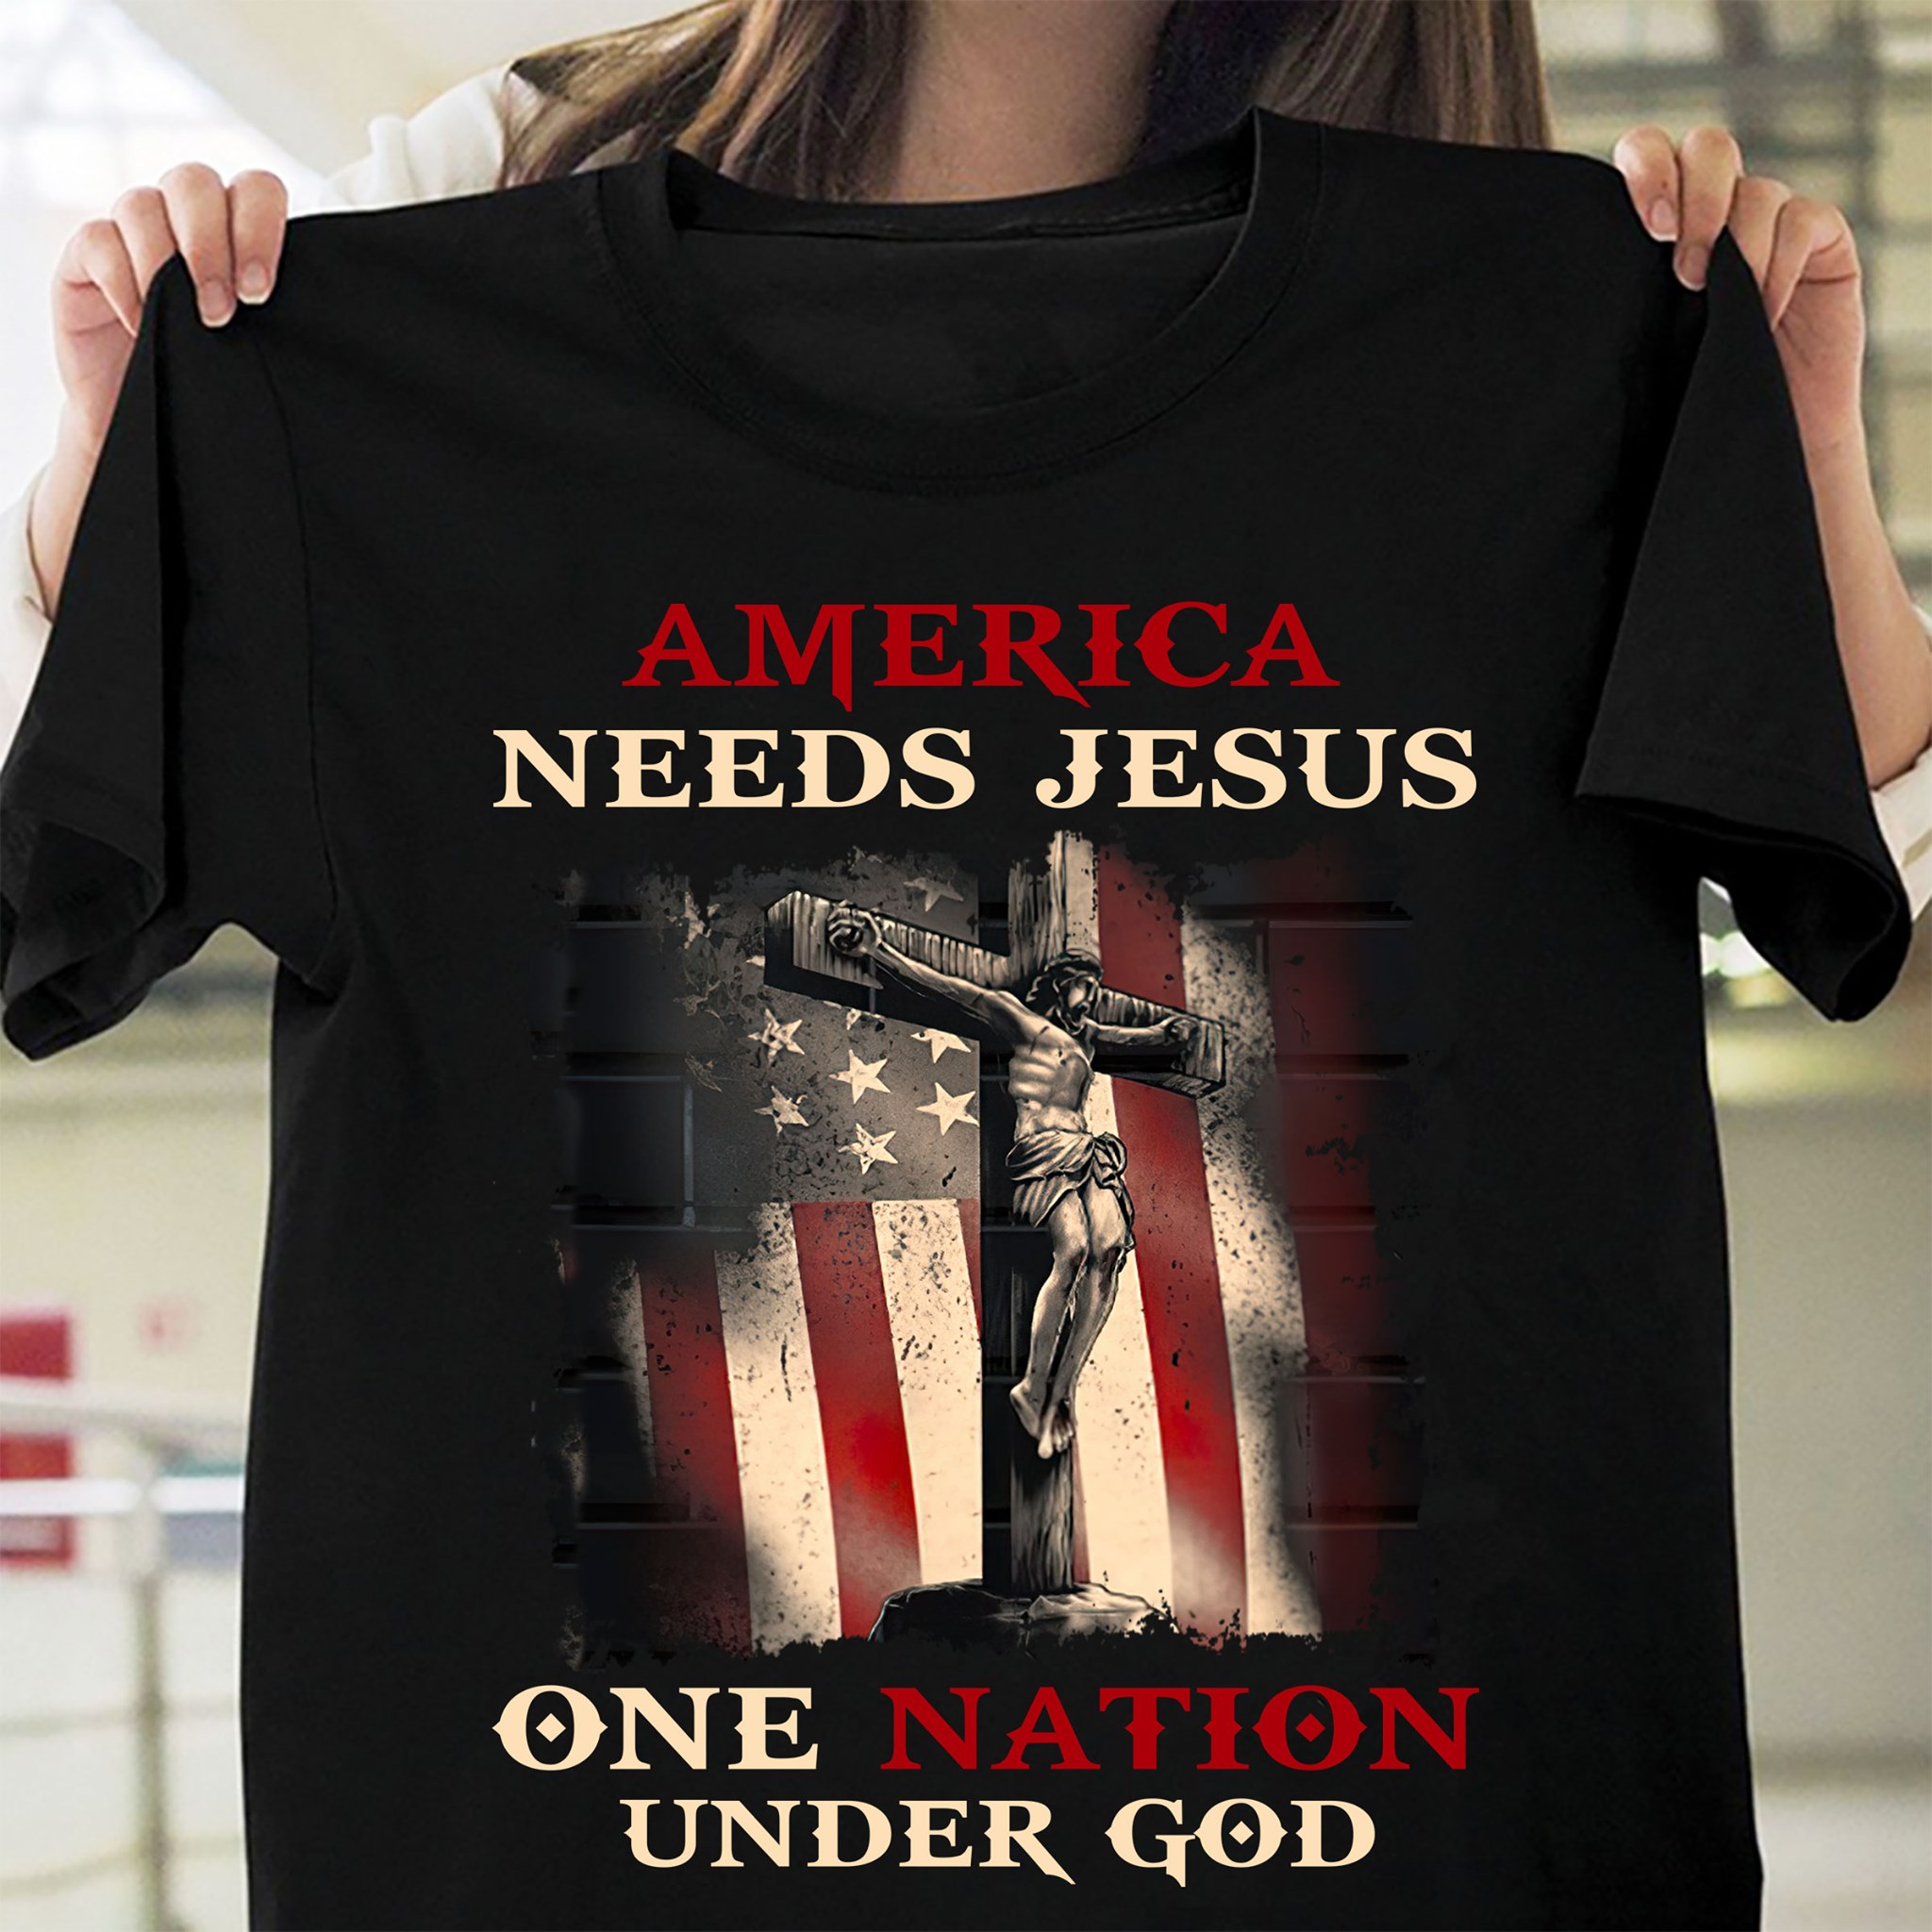 America needs Jesus - One nation under God - America flag